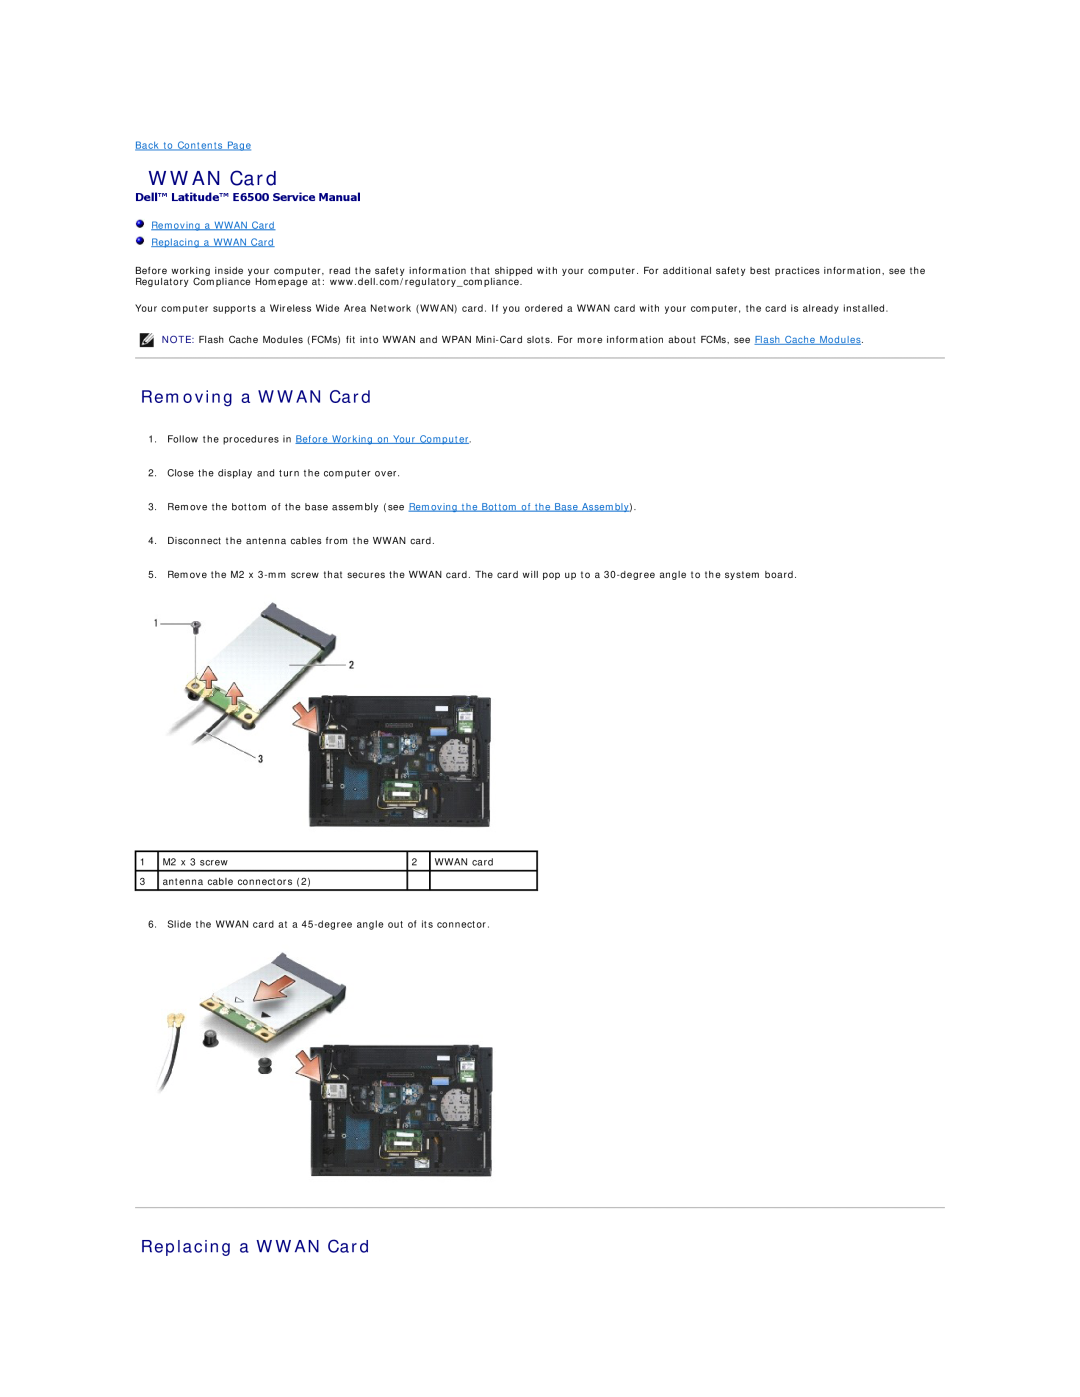 Dell Removing a WWAN Card Replacing a WWAN Card, Dell Latitude E6500 Service Manual, Back to Contents Page 